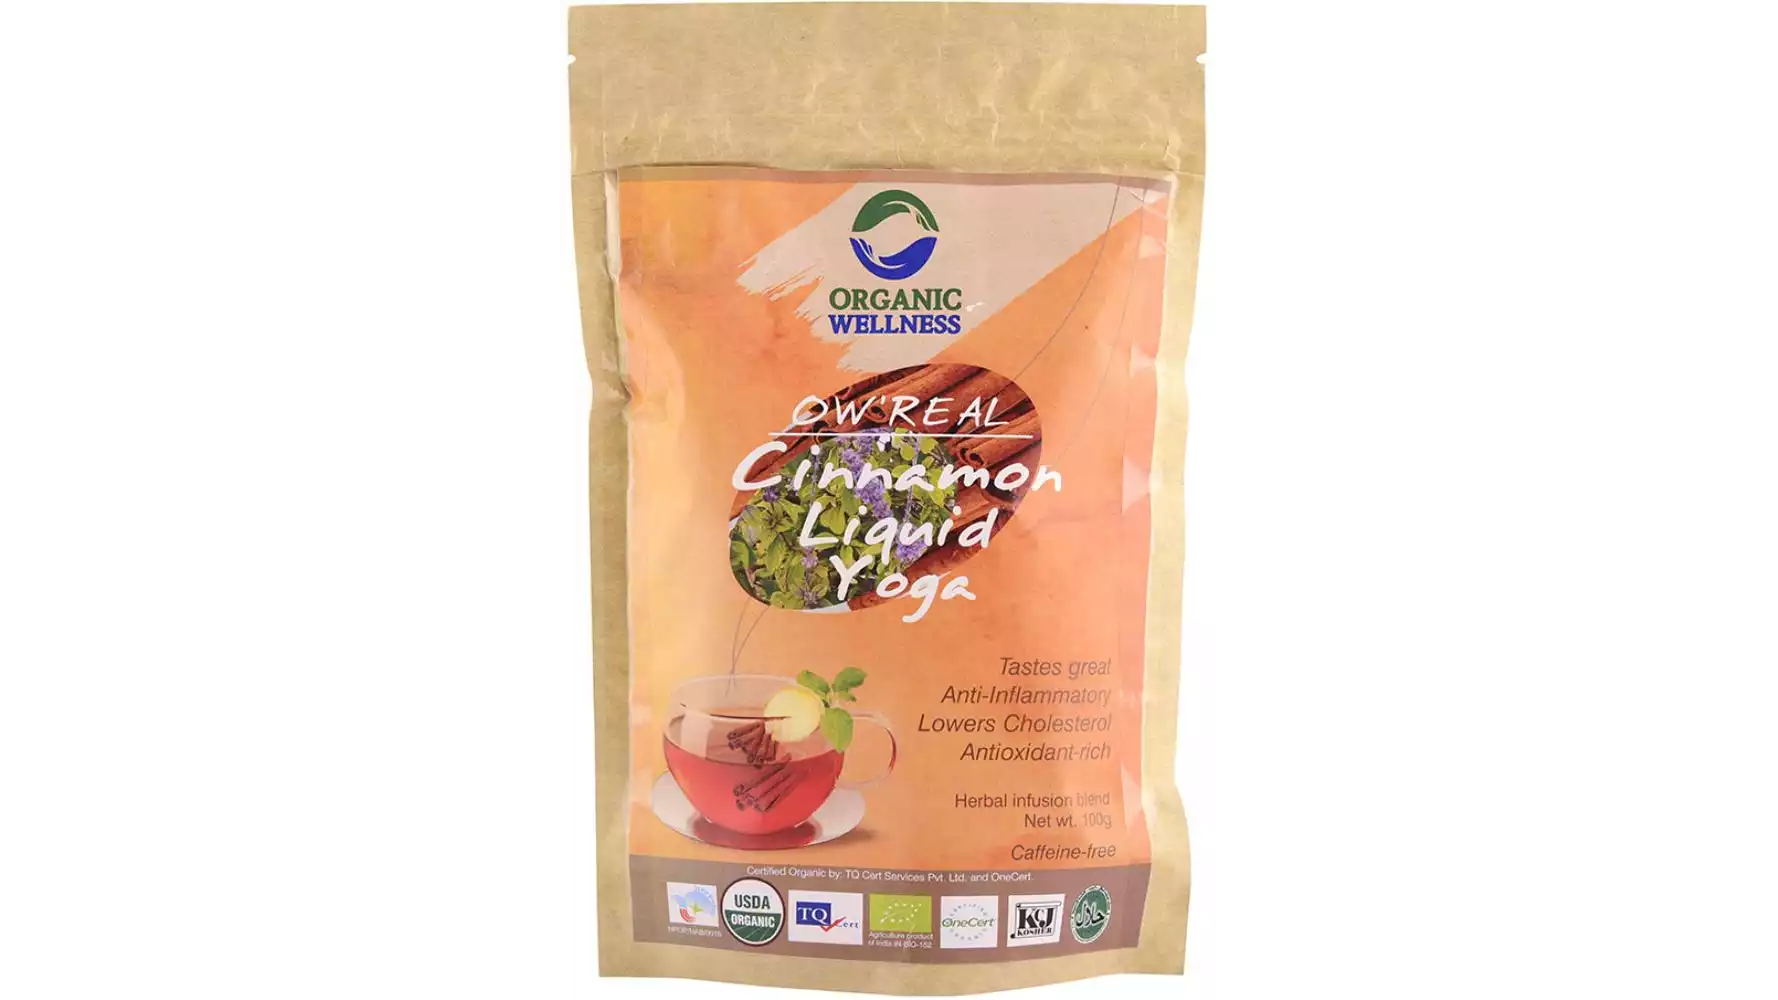 Organic Wellness Cinnamon Liquid Yoga Tea Pouch (100g)